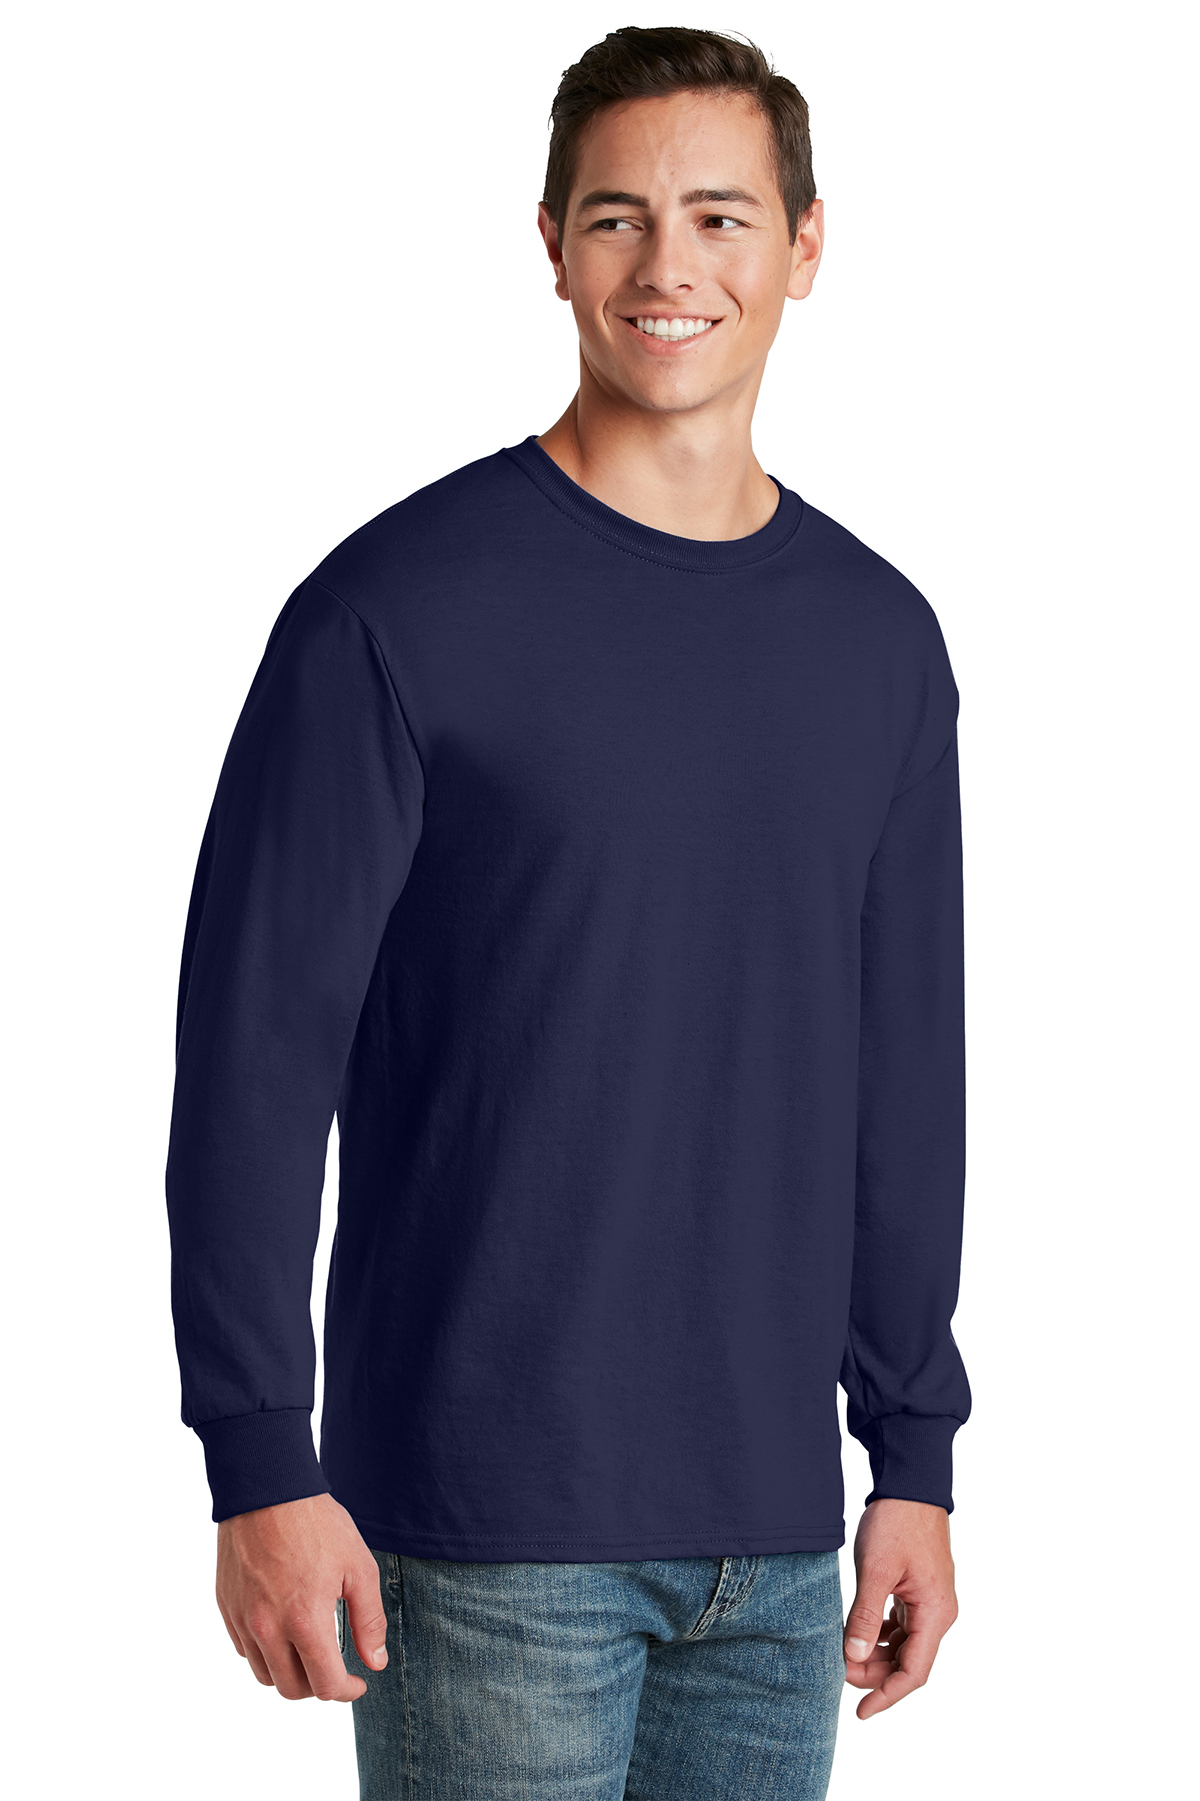 JERZEES - Dri-Power 50/50 Cotton/Poly Long Sleeve T-Shirt | Product ...